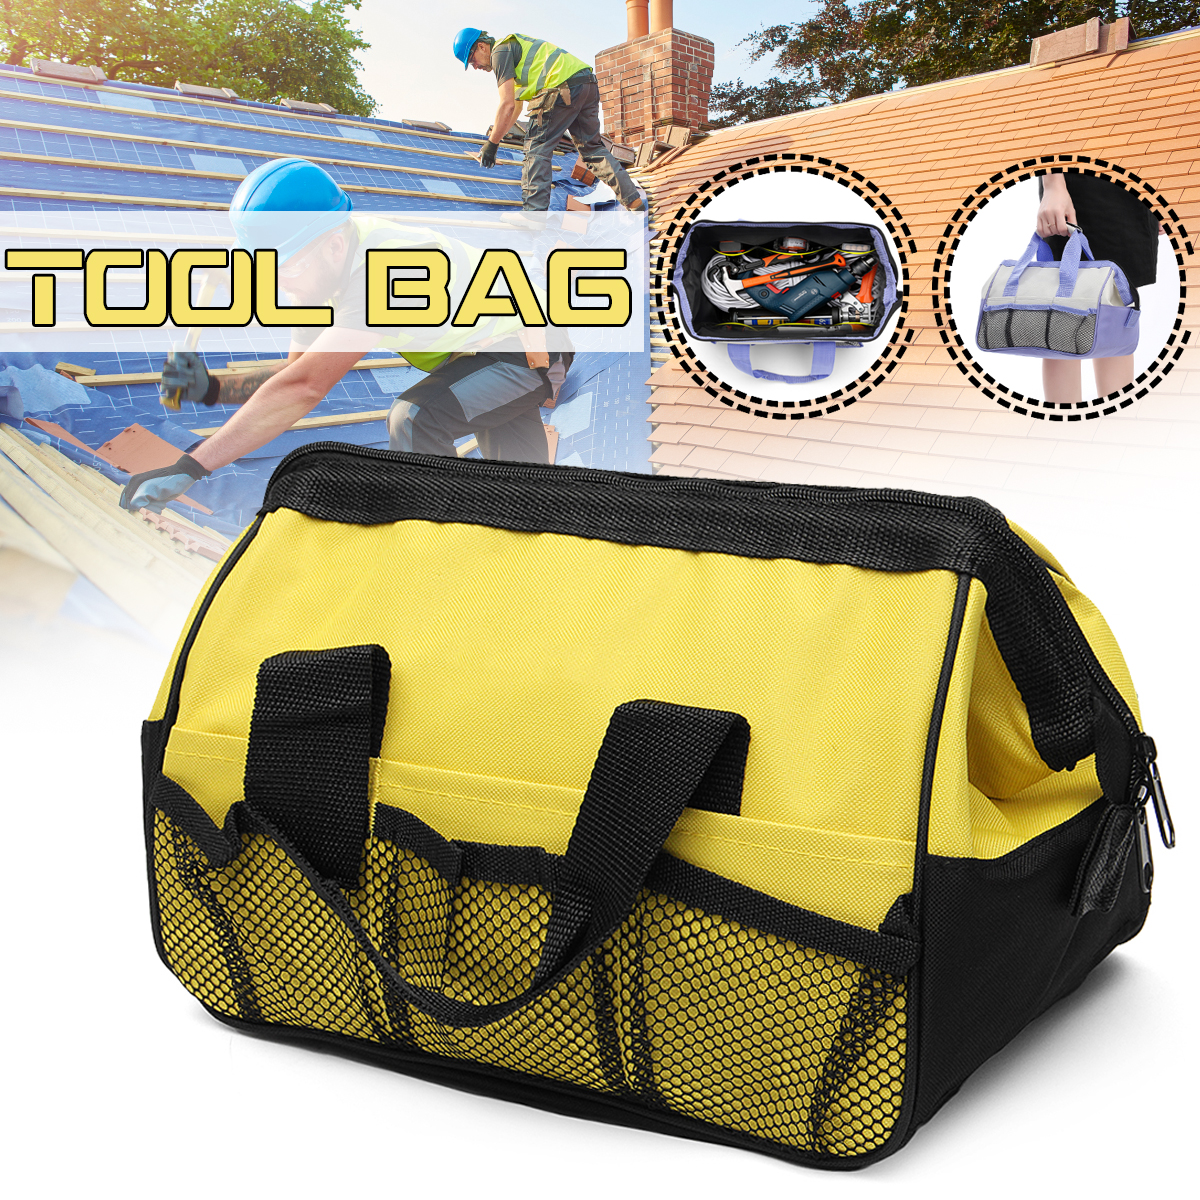 Multifunction-Repair-Tool-Bag-Canvas-Fabric-Electrician-Pocket-Storage-Case-Bag-1347101-1